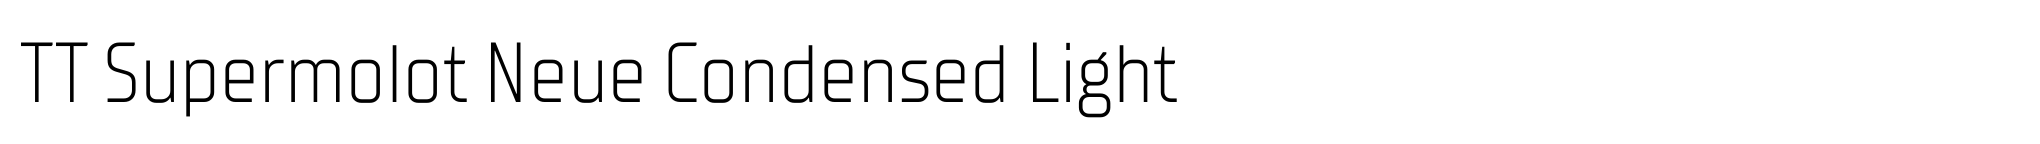 TT Supermolot Neue Condensed Light image